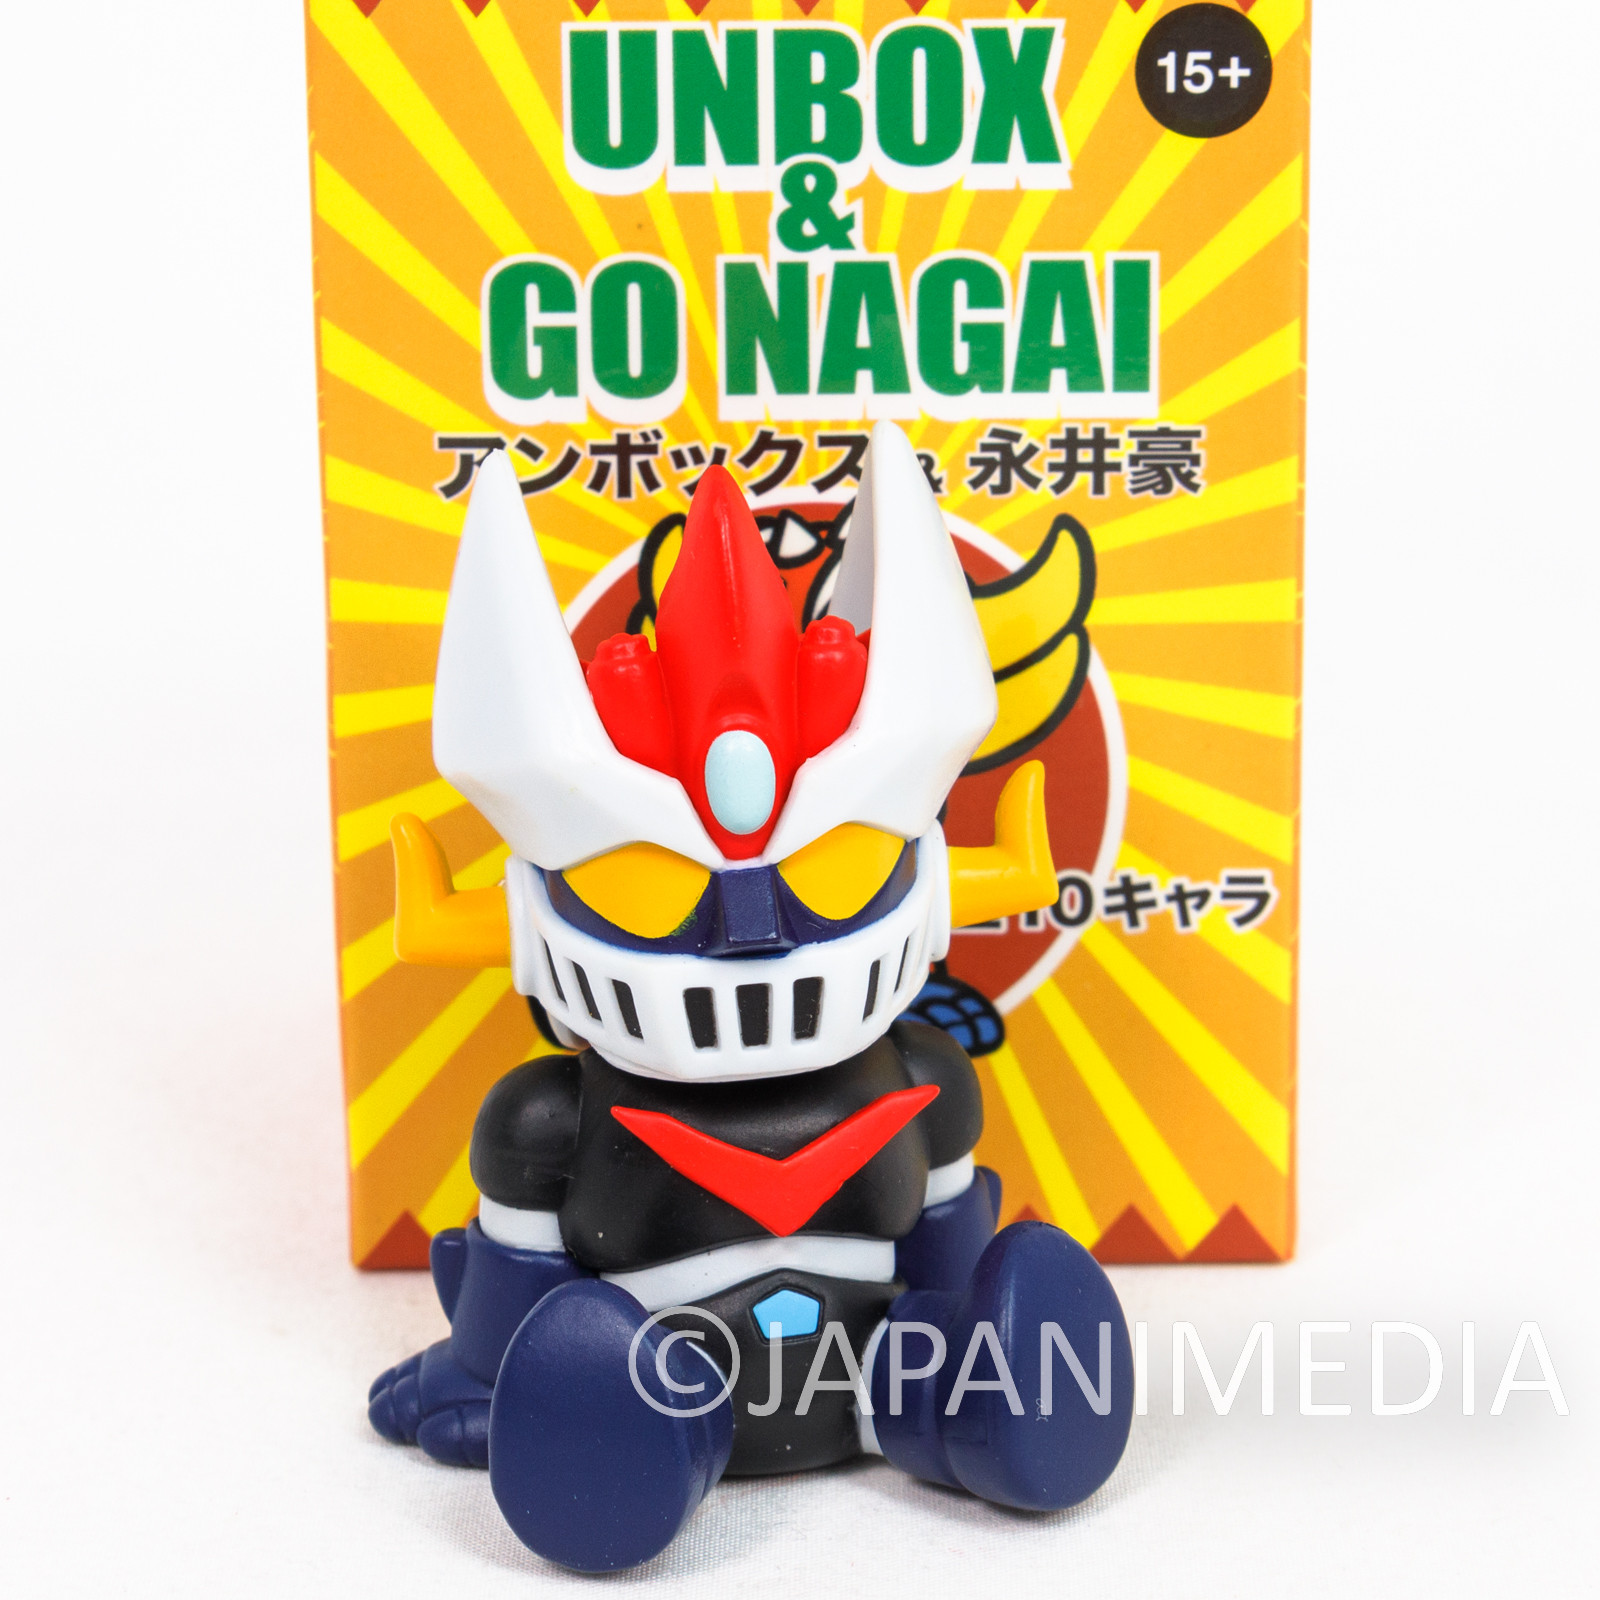 UNBOX & NAGAI GO Figure Series / Great Mazinger